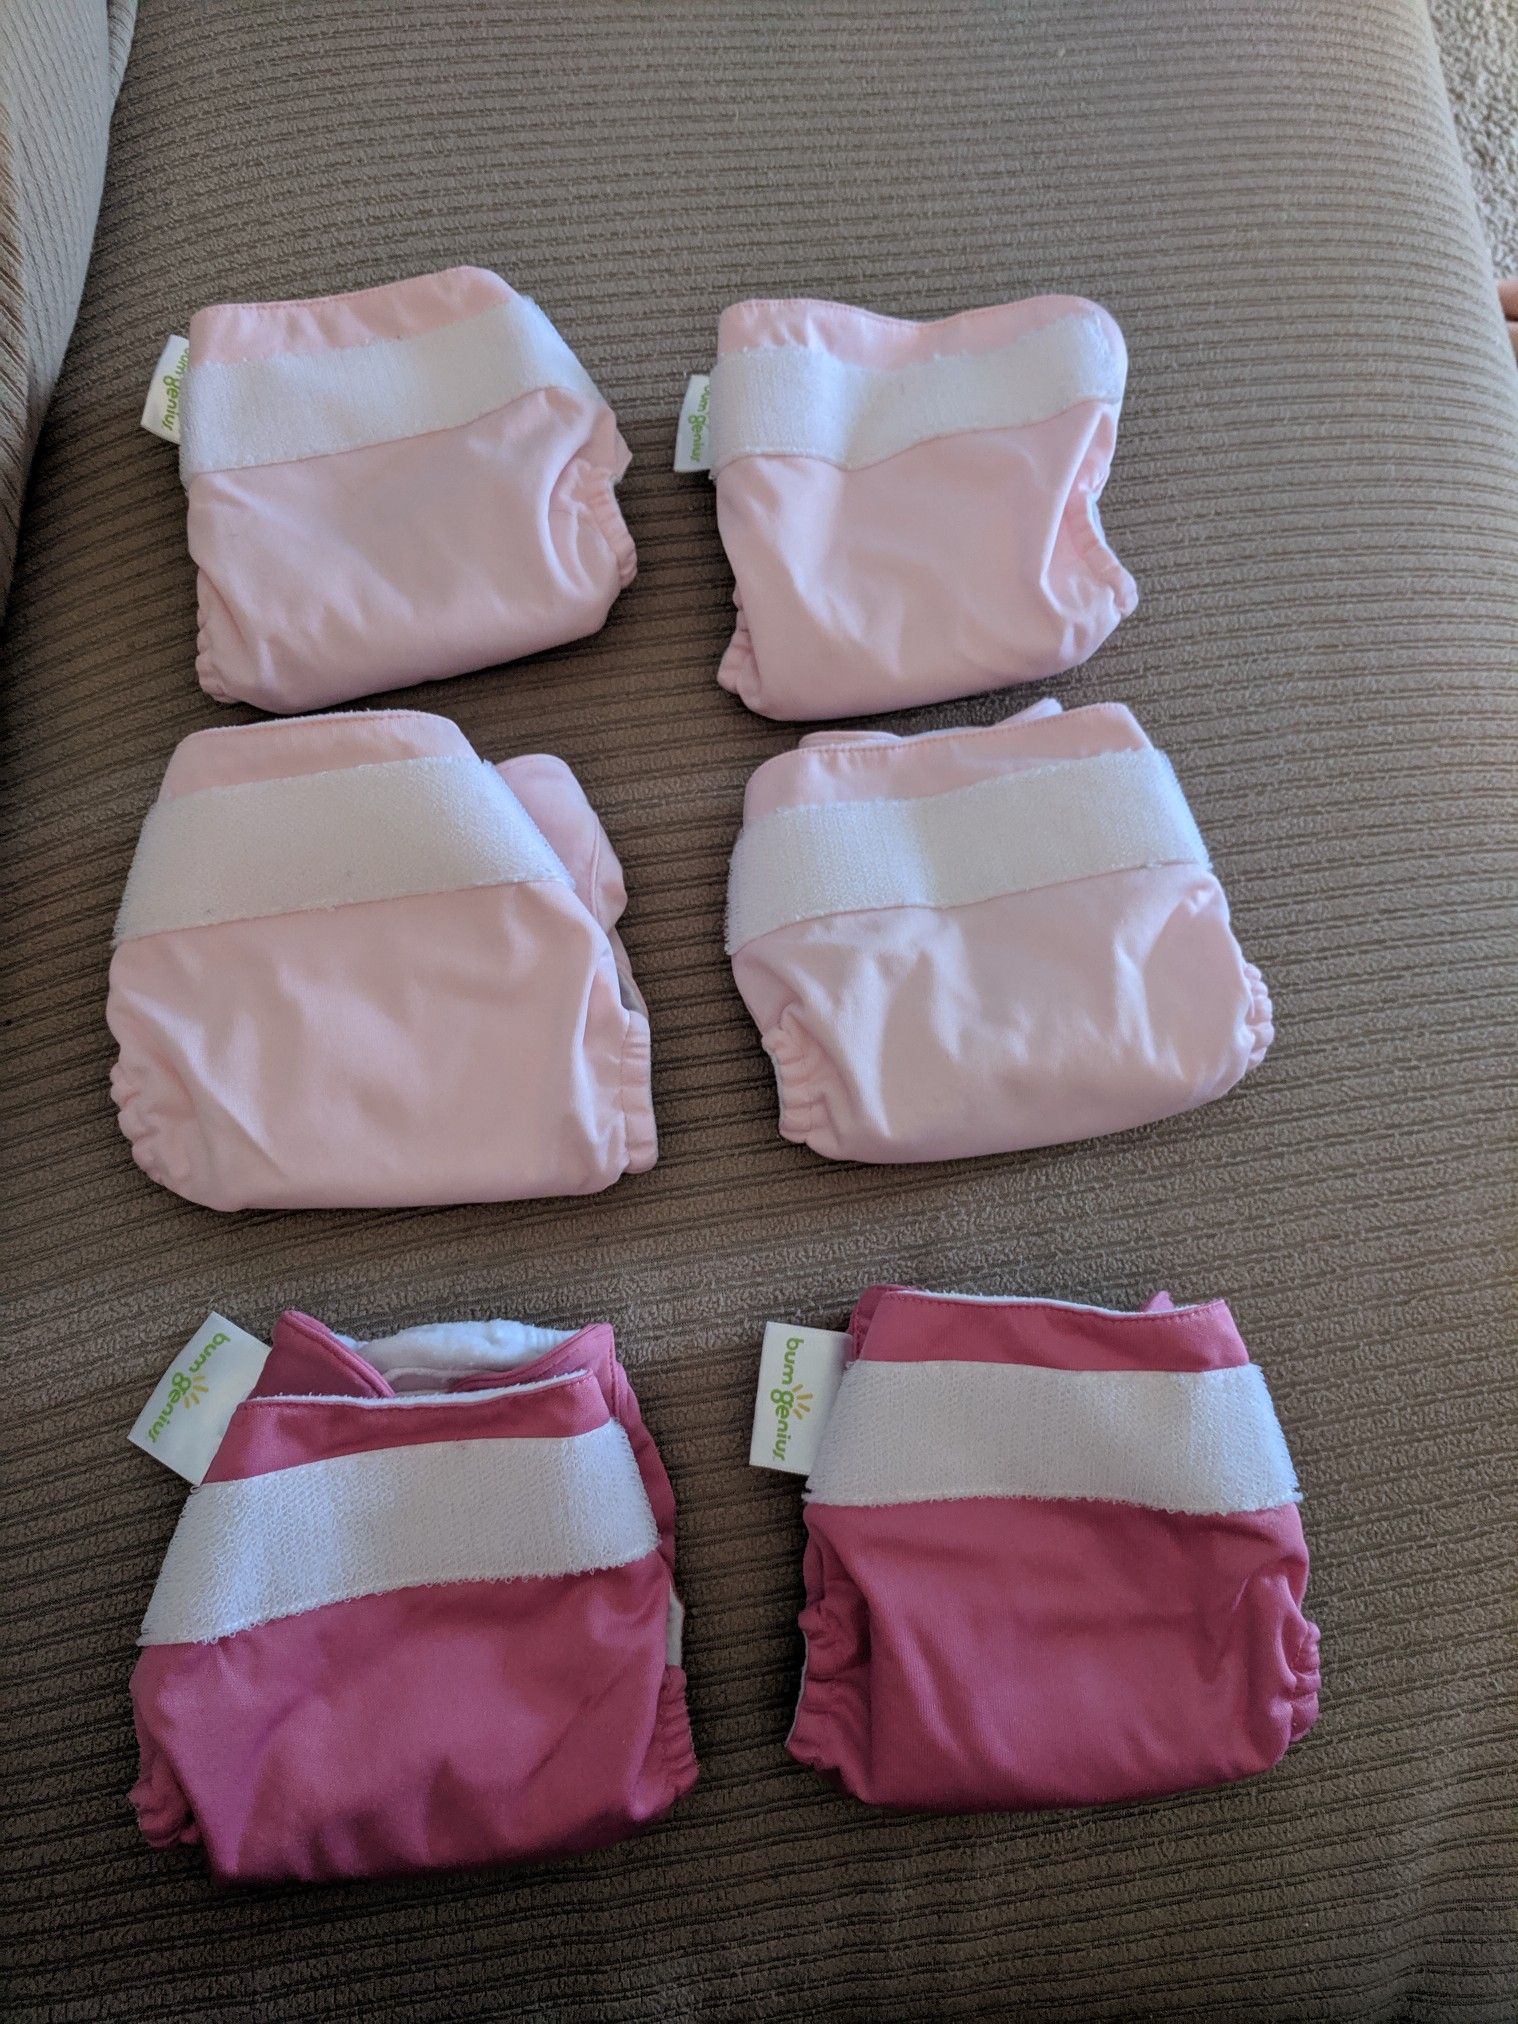 6 Bumgenius newborn / x-small cloth diapers